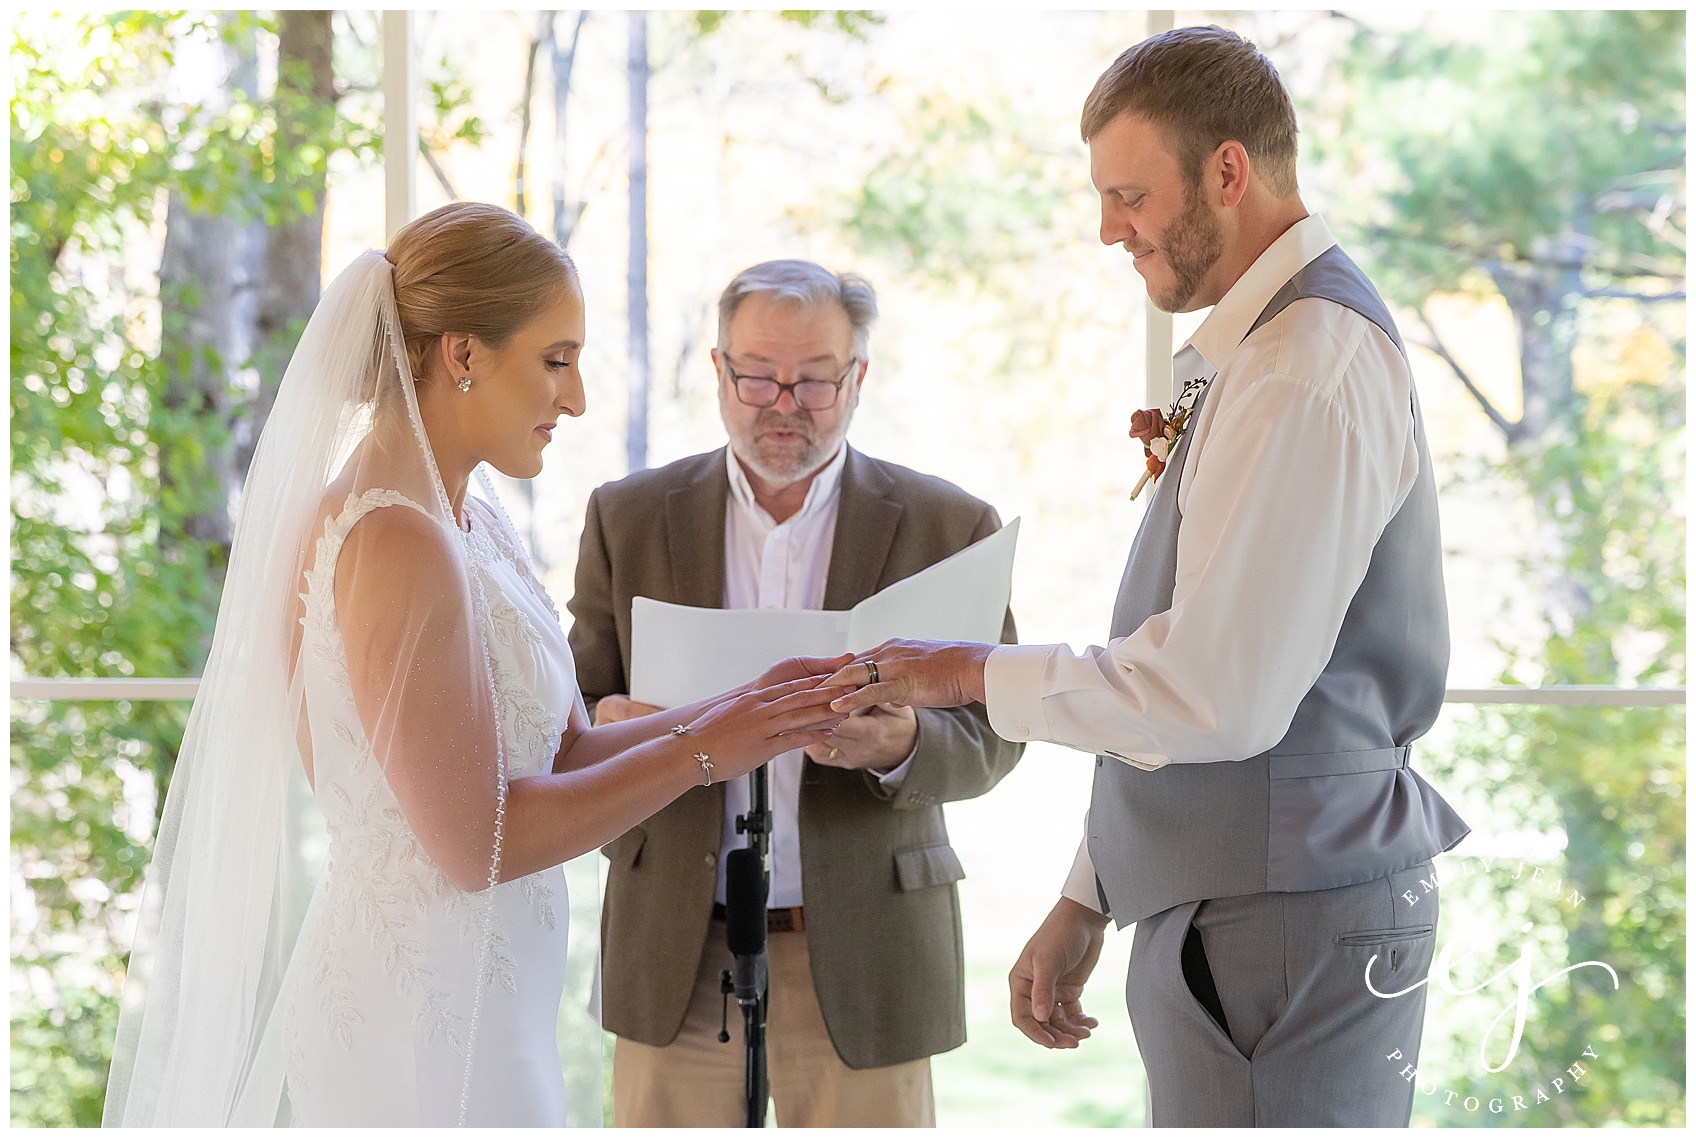 exchanging rings and vows at winnebago springs wedding caledonia minnesota